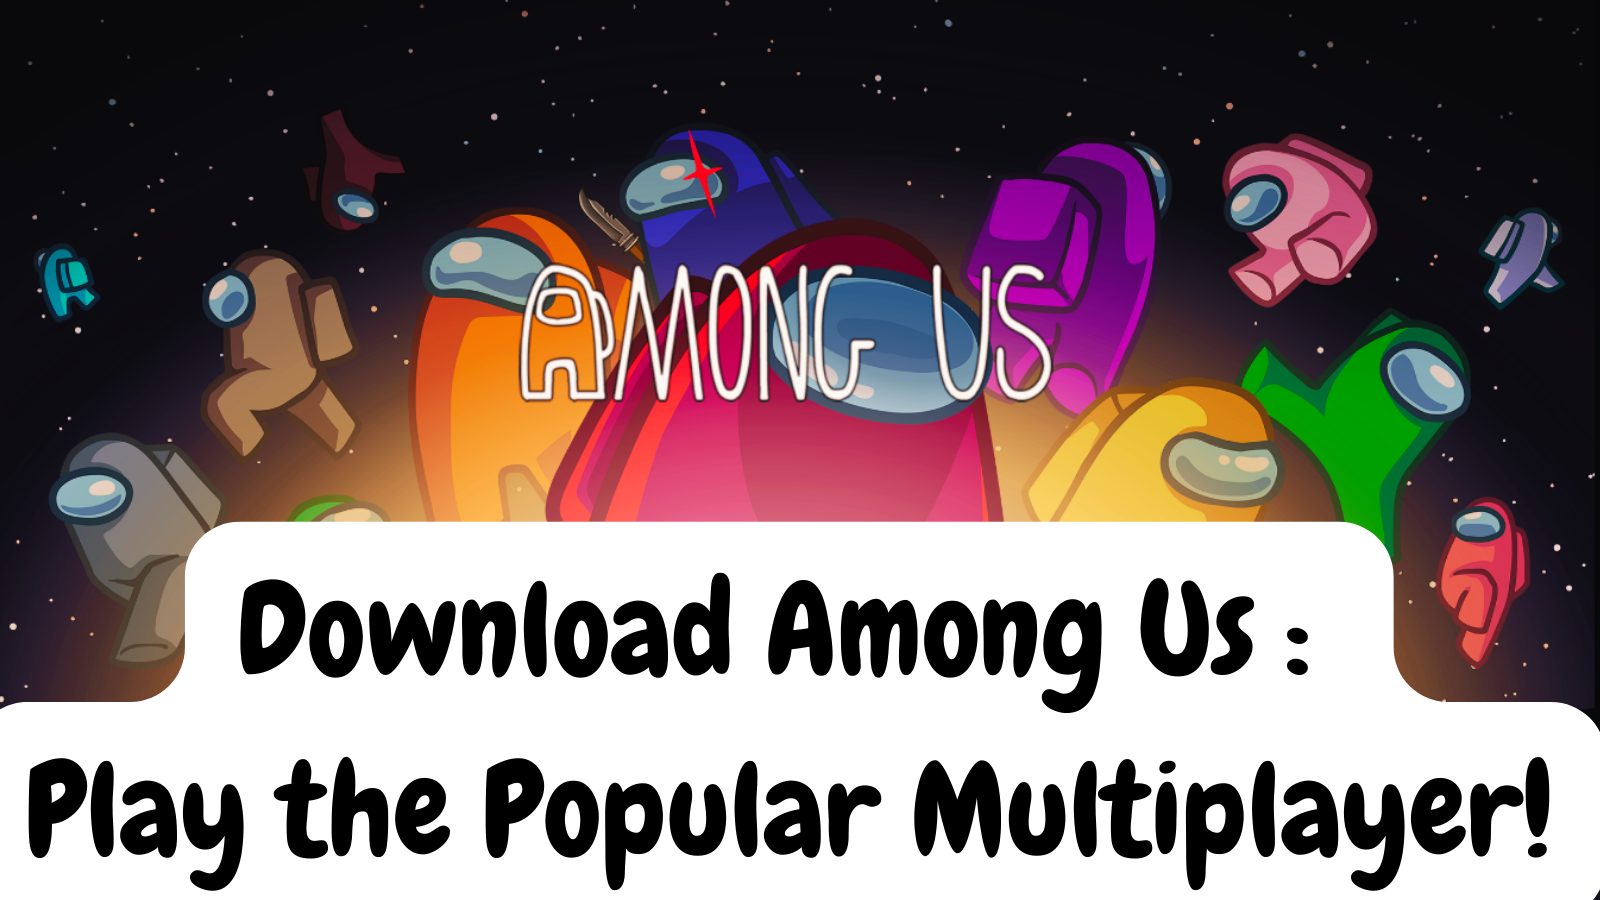 Among Us (gamerip) (2018) MP3 - Download Among Us (gamerip) (2018)  Soundtracks for FREE!